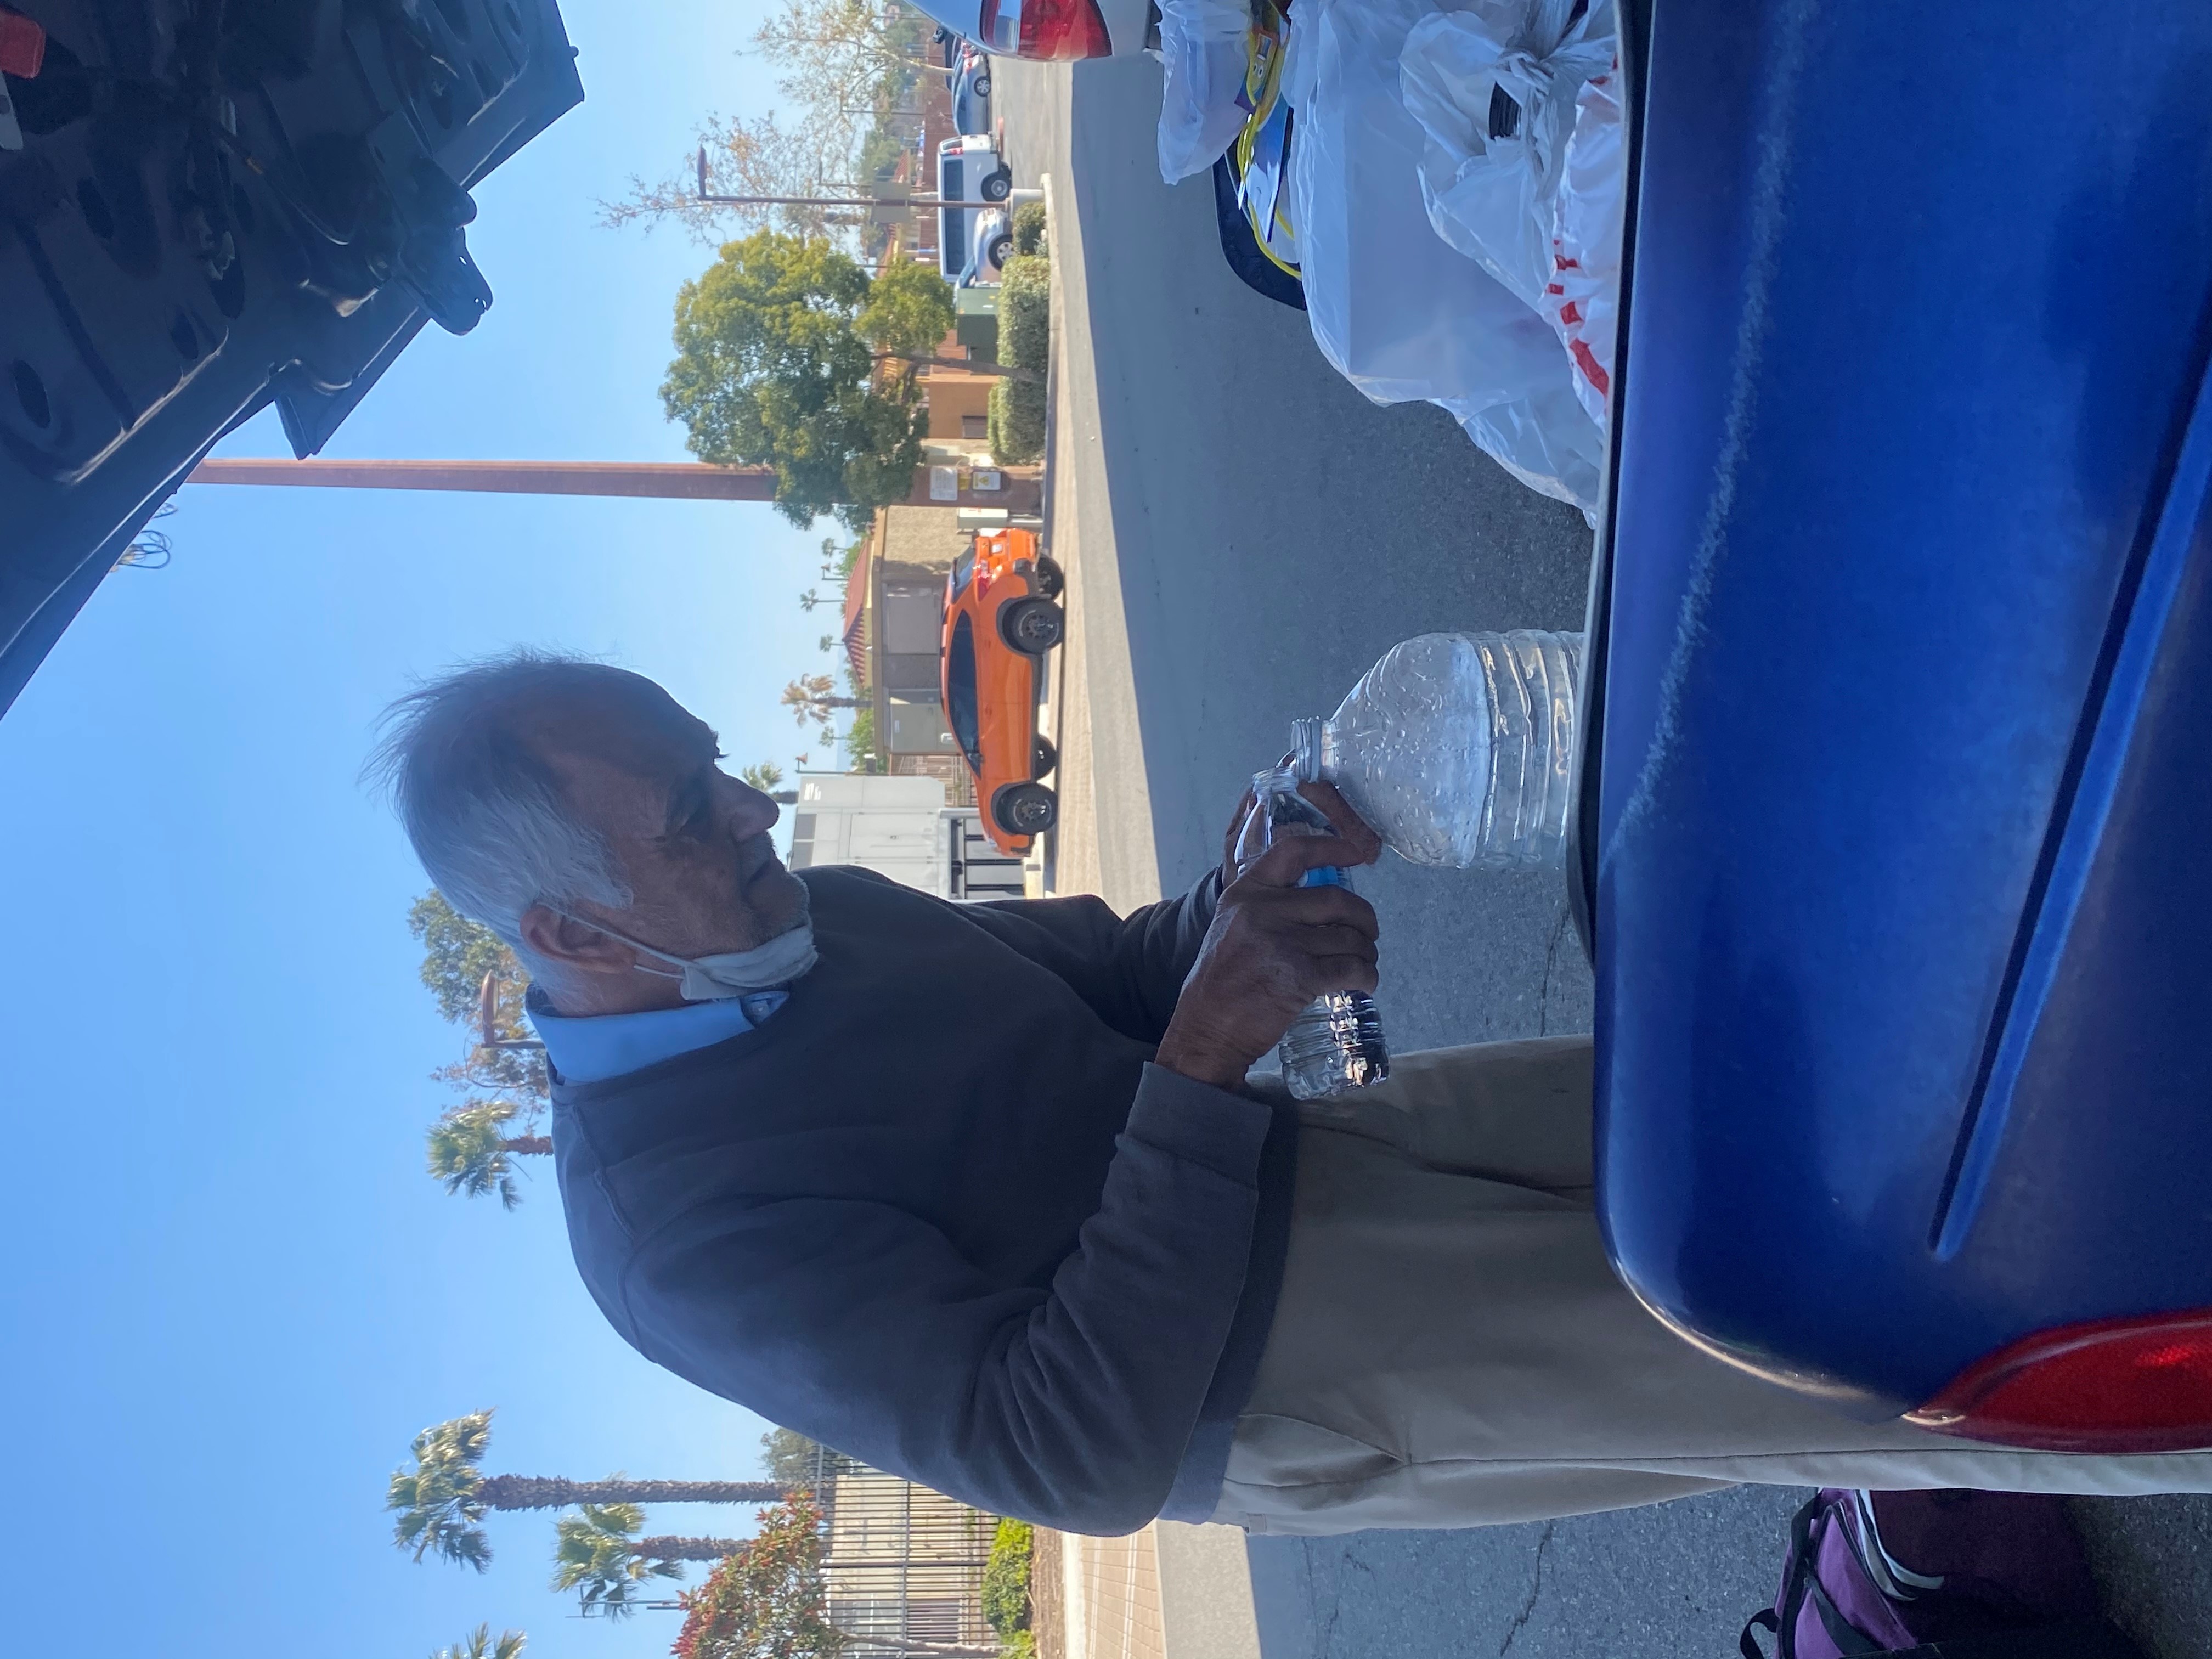 Former Substitute Teacher Mr. V handling water jug in his car